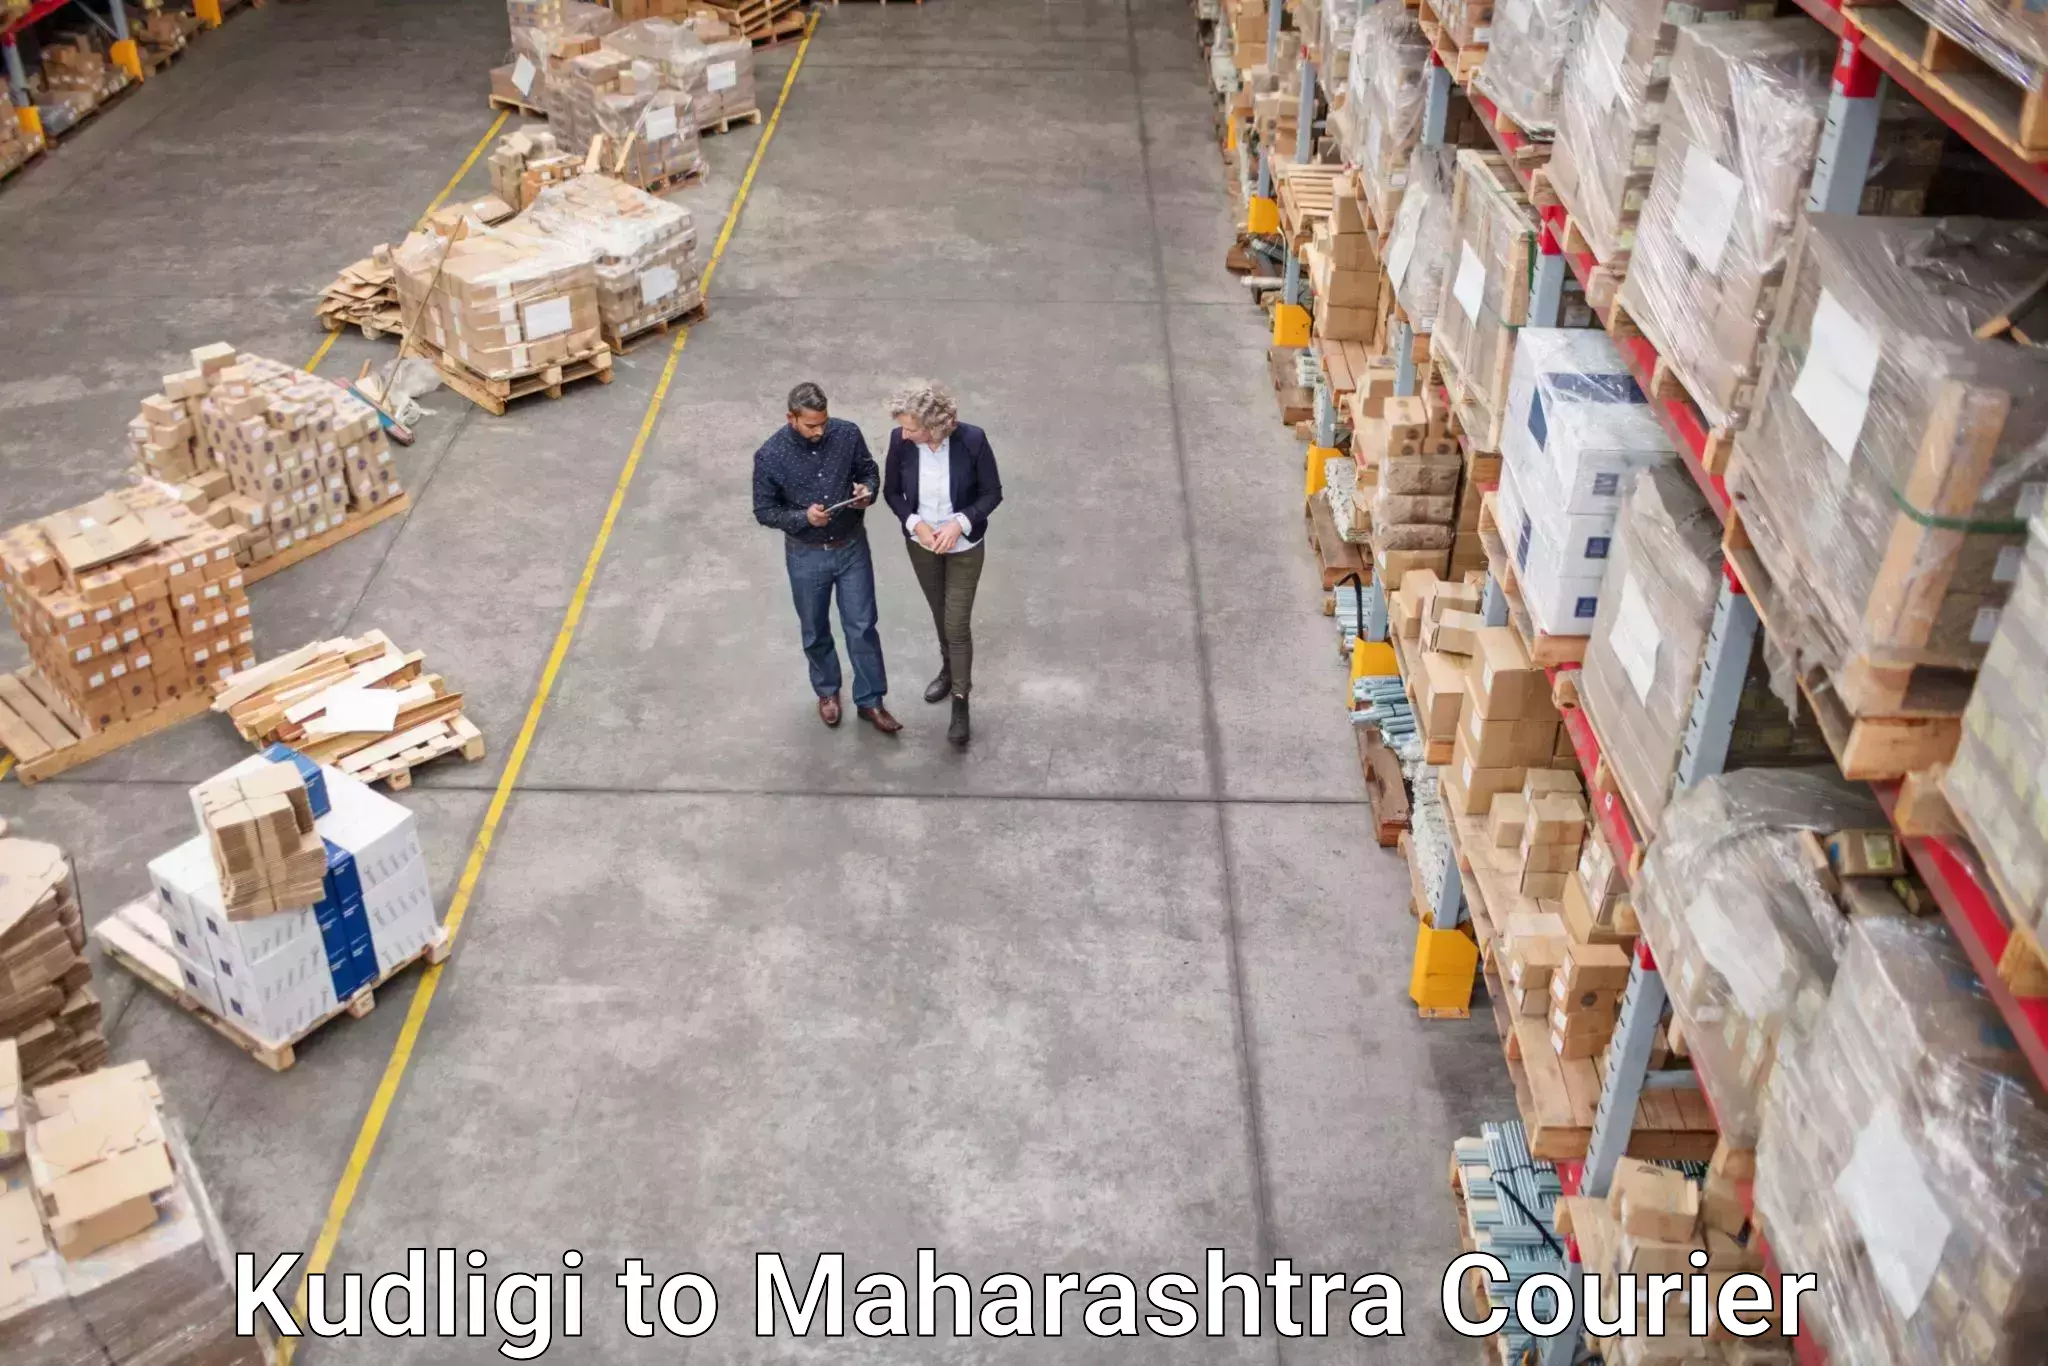 Courier service innovation Kudligi to Maharashtra